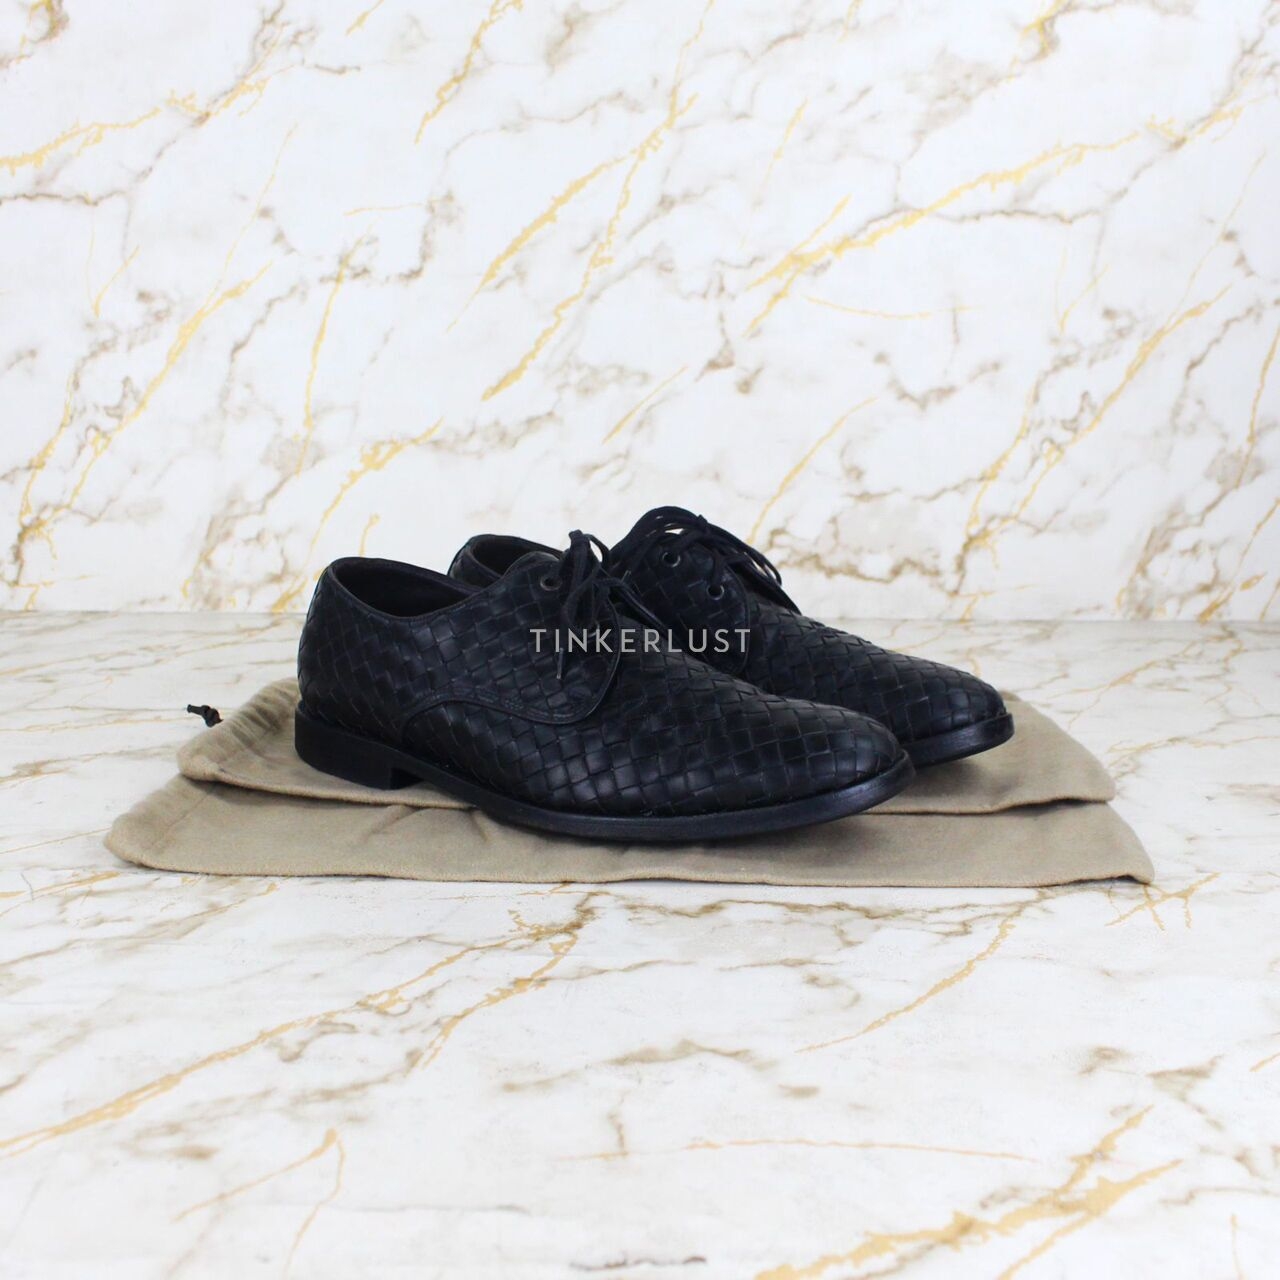 Bottega Veneta Black Leather Loafers